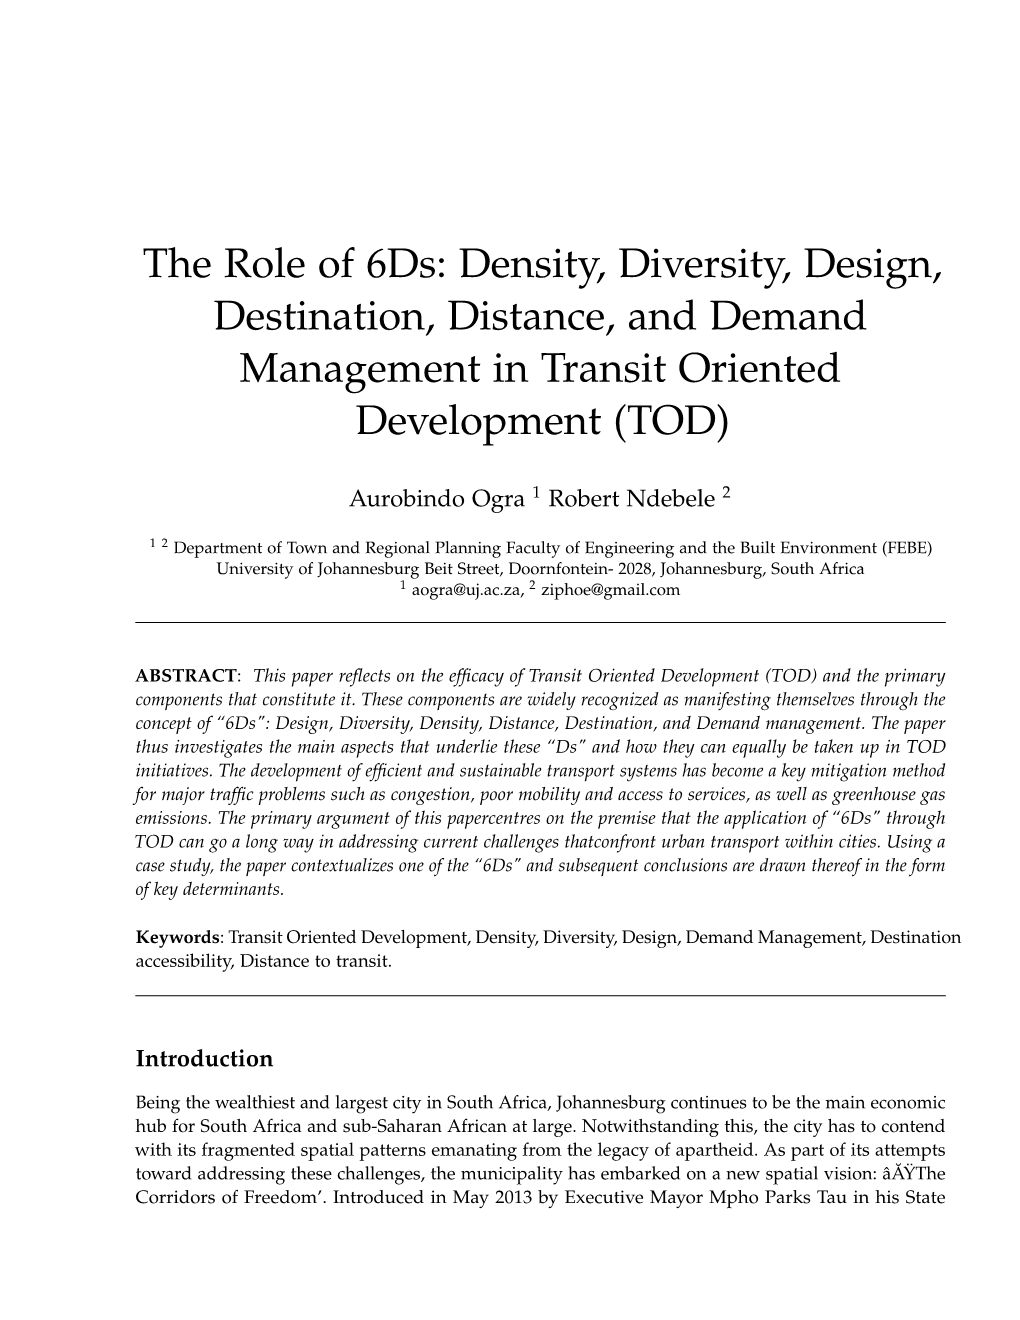 Density, Diversity, Design, Destination, Distance, and Demand Management in Transit Oriented Development (TOD)